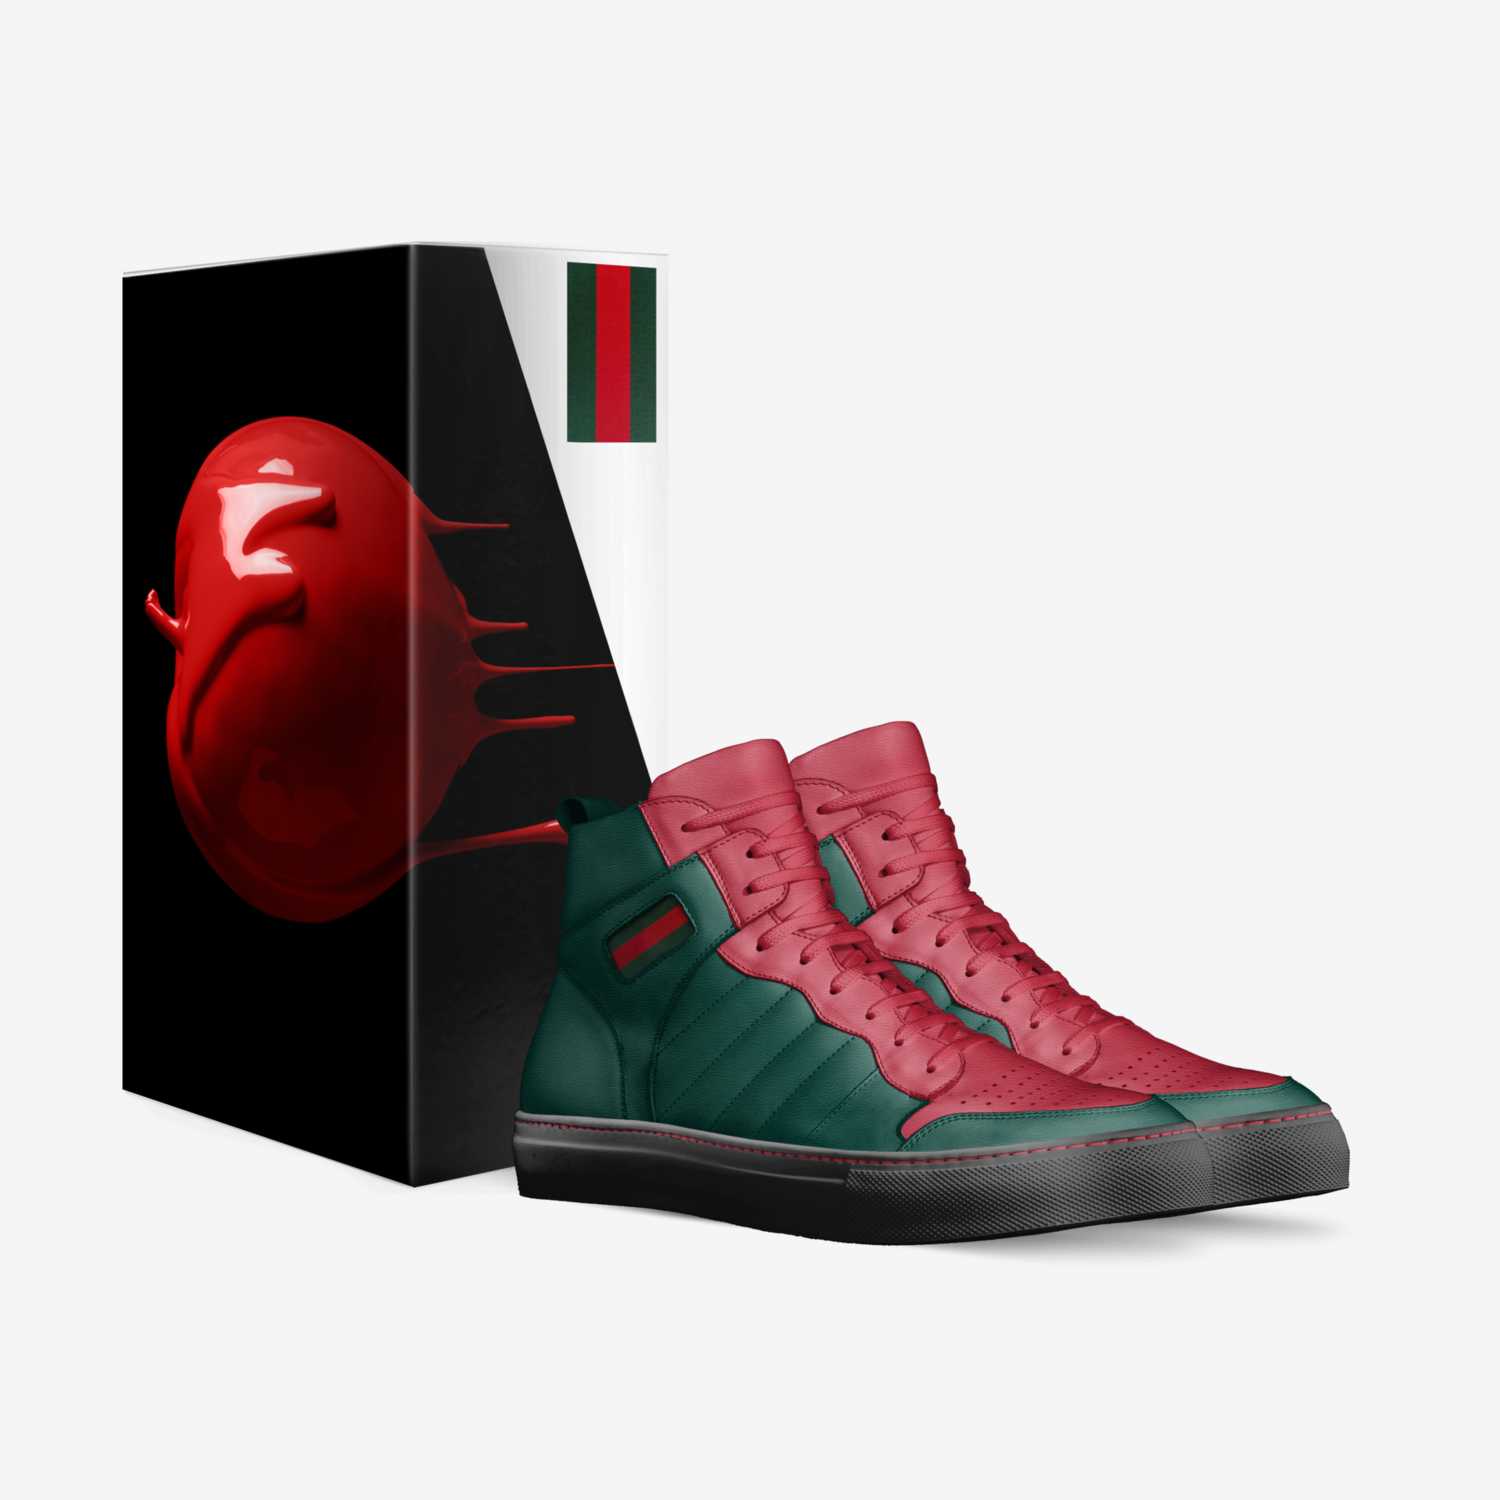 ESKERITT | A Custom Shoe concept by Kenton James